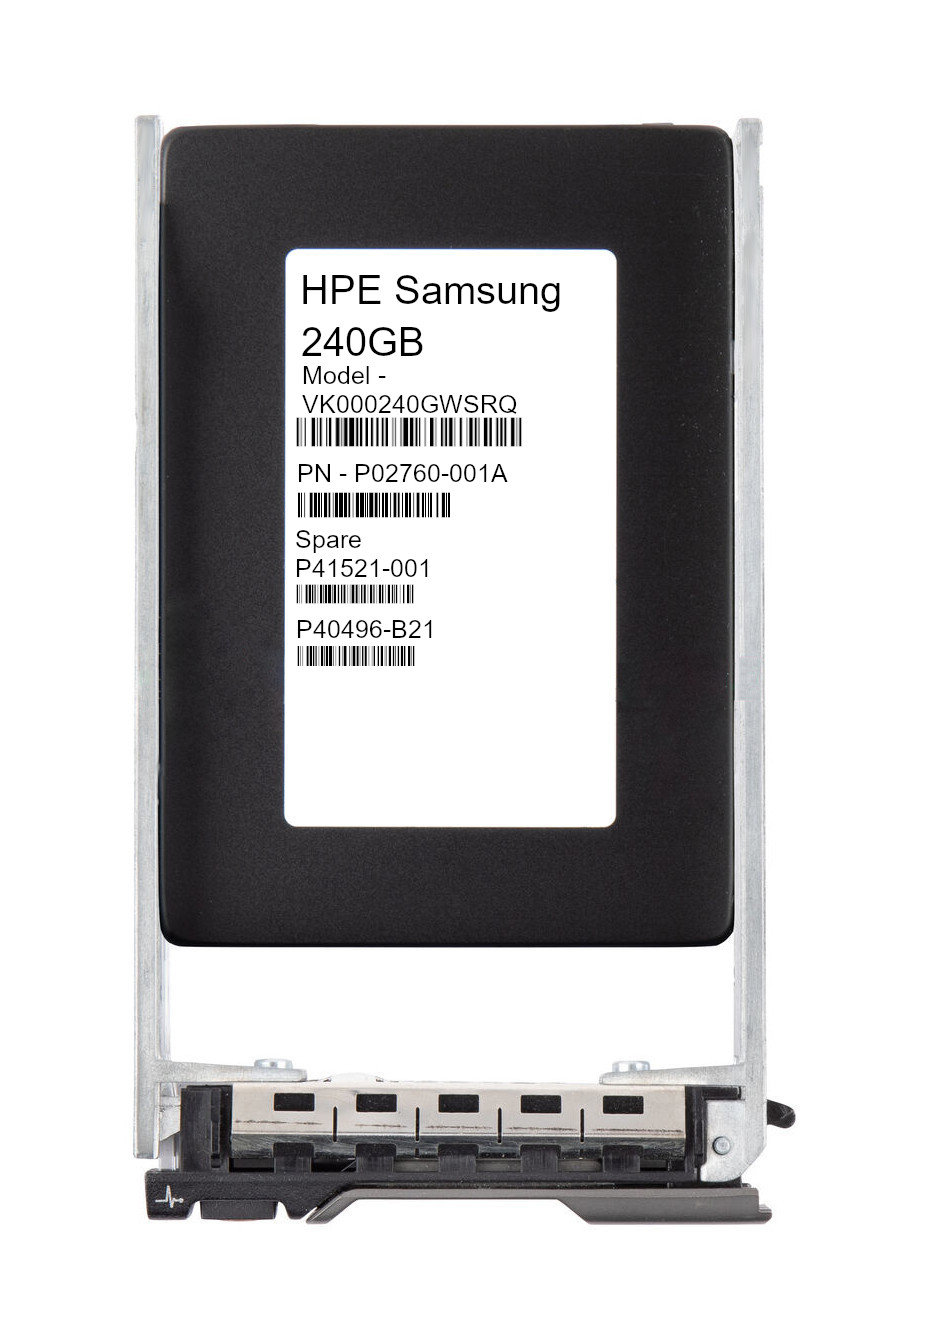 HPE Samsung 240GB VK000240GWSRQ 2.5" SSD SATA P02760-001 P41521-001 P40496-B21